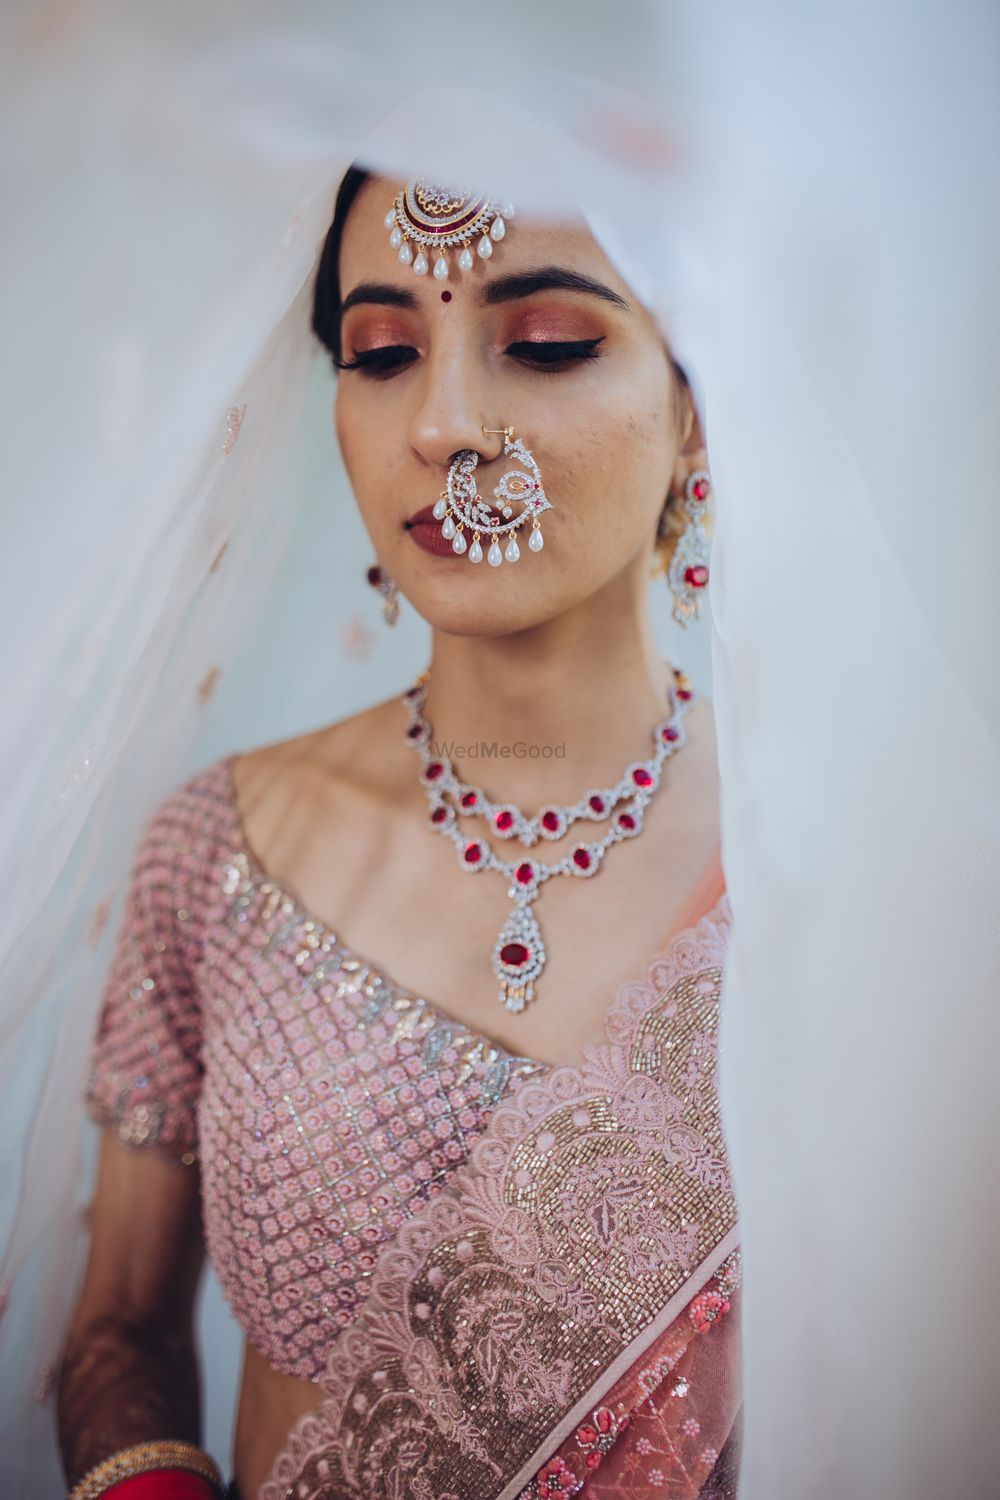 Photo of A bride wearing diamond jewellery on her wedding day